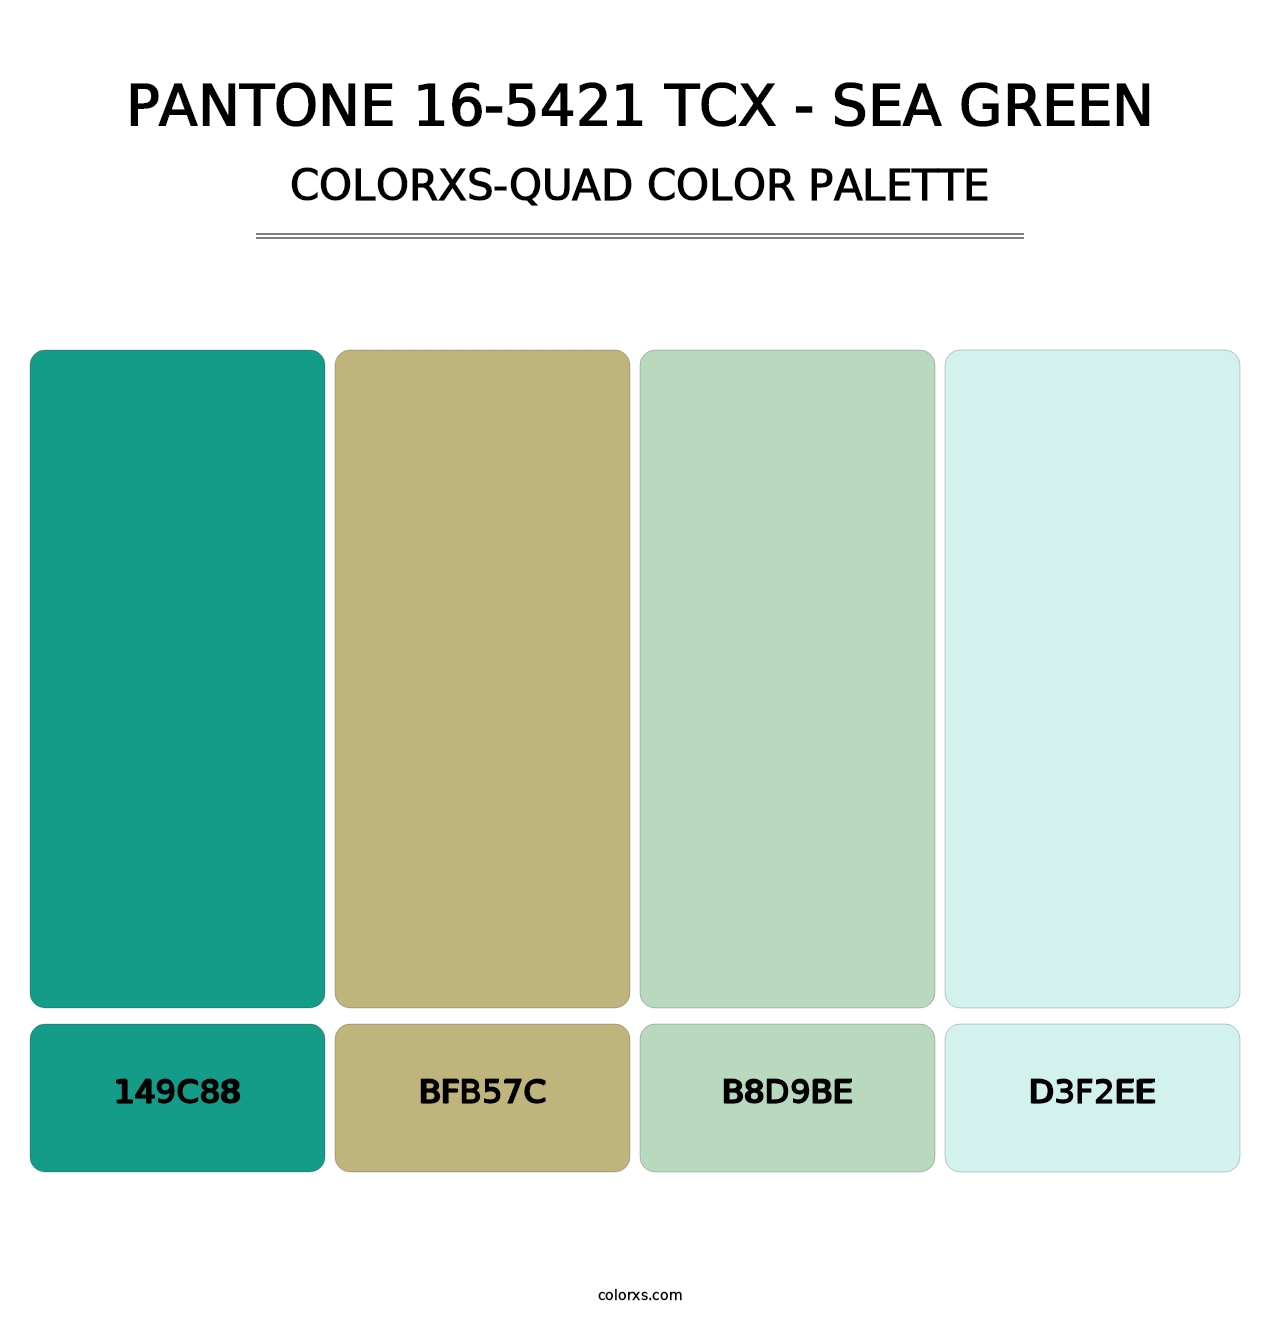 PANTONE 16-5421 TCX - Sea Green - Colorxs Quad Palette